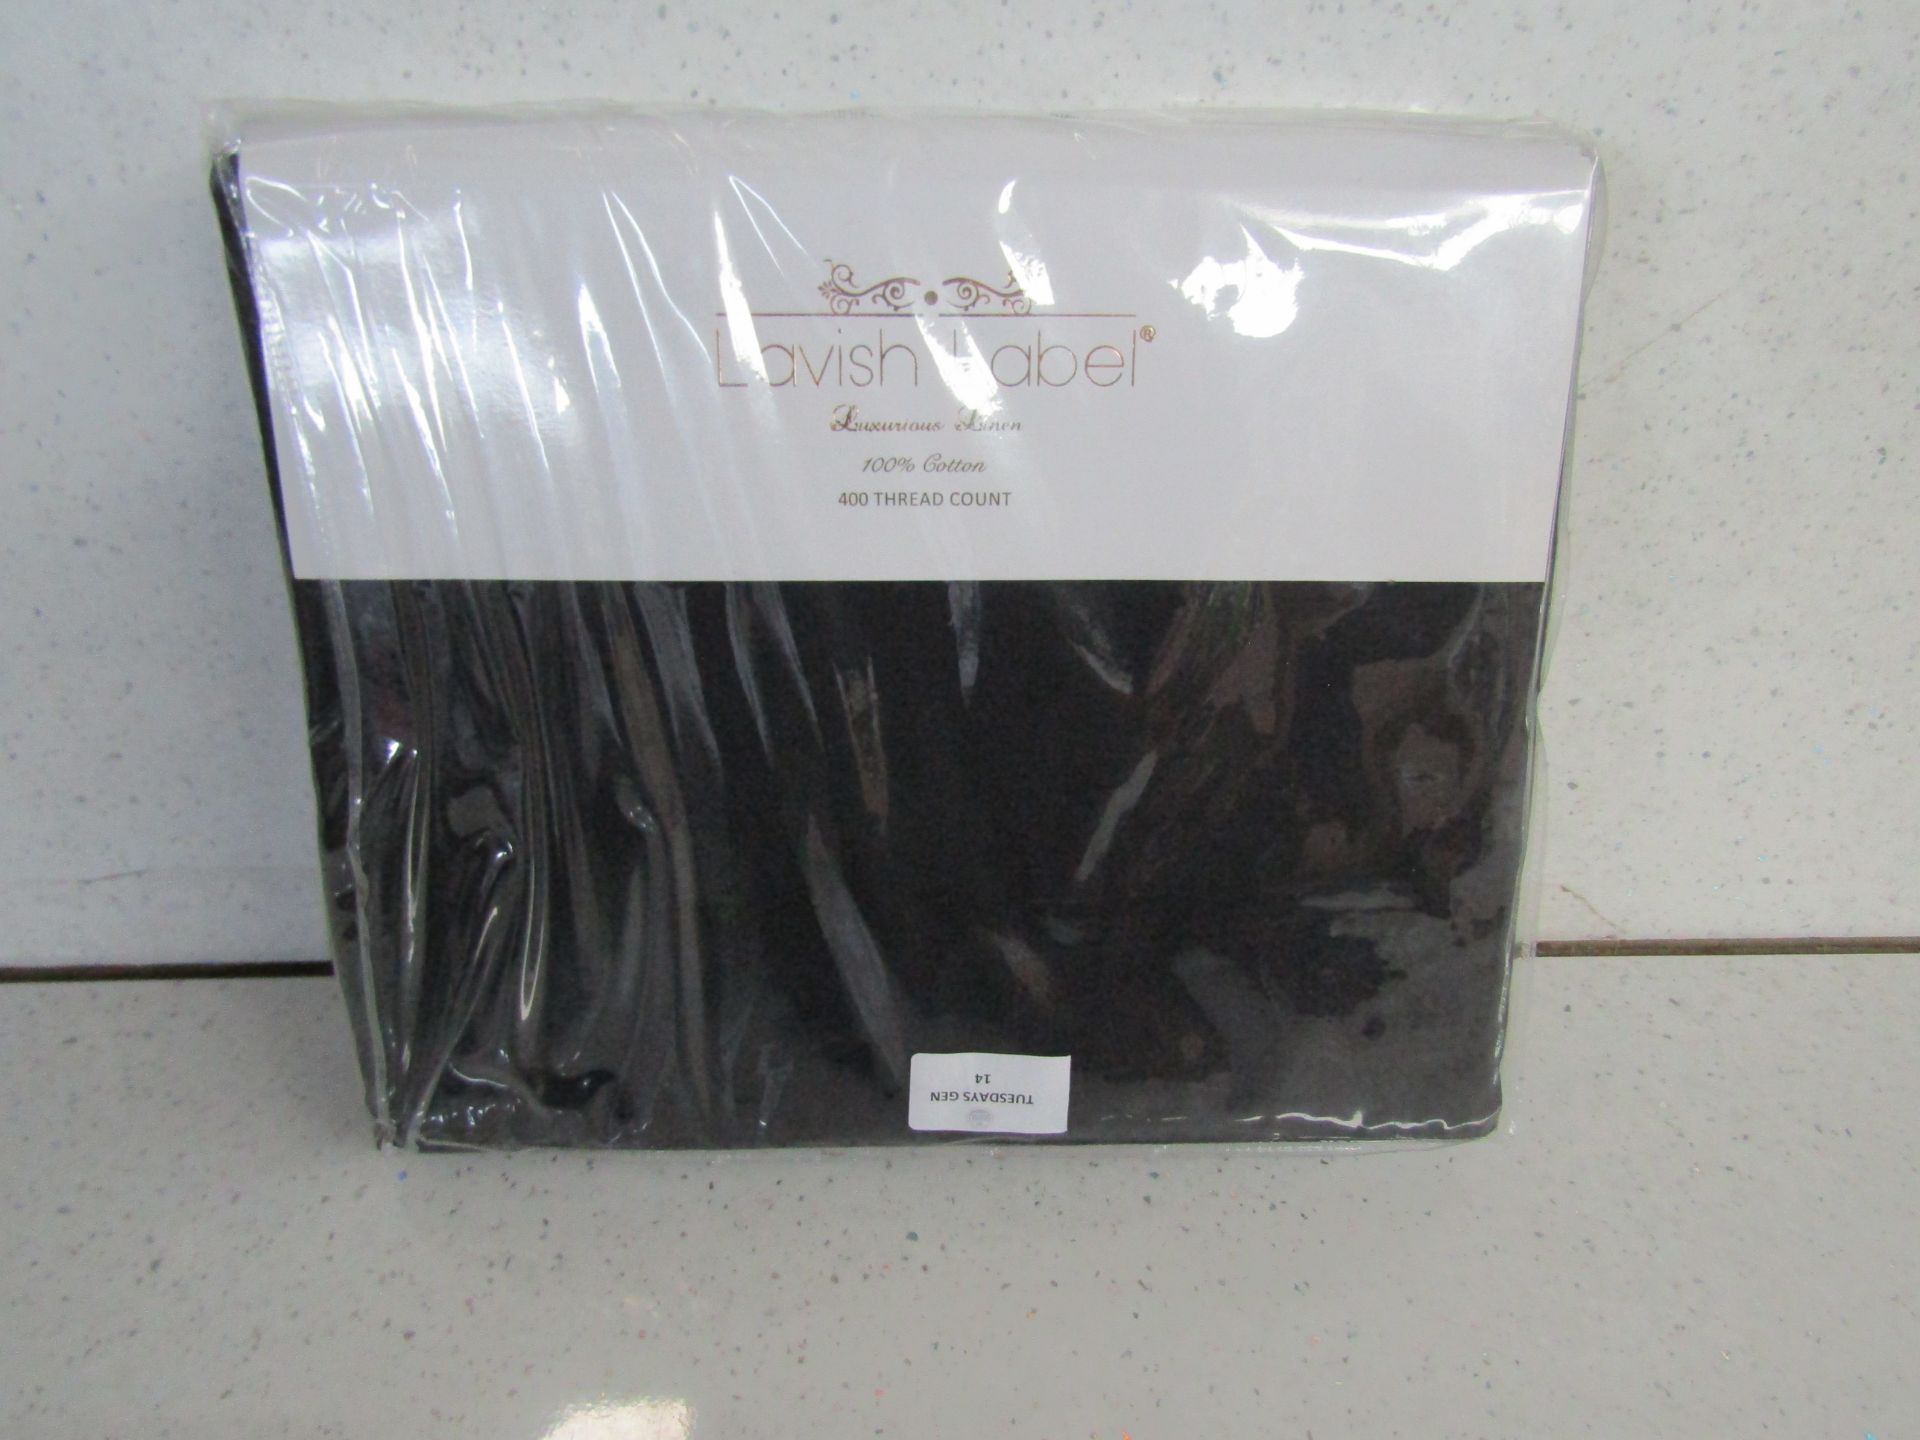 Lavish Label - Cotton 400 Thread Count Satin Stripe Check / Black Single - Packaged. - Image 3 of 3